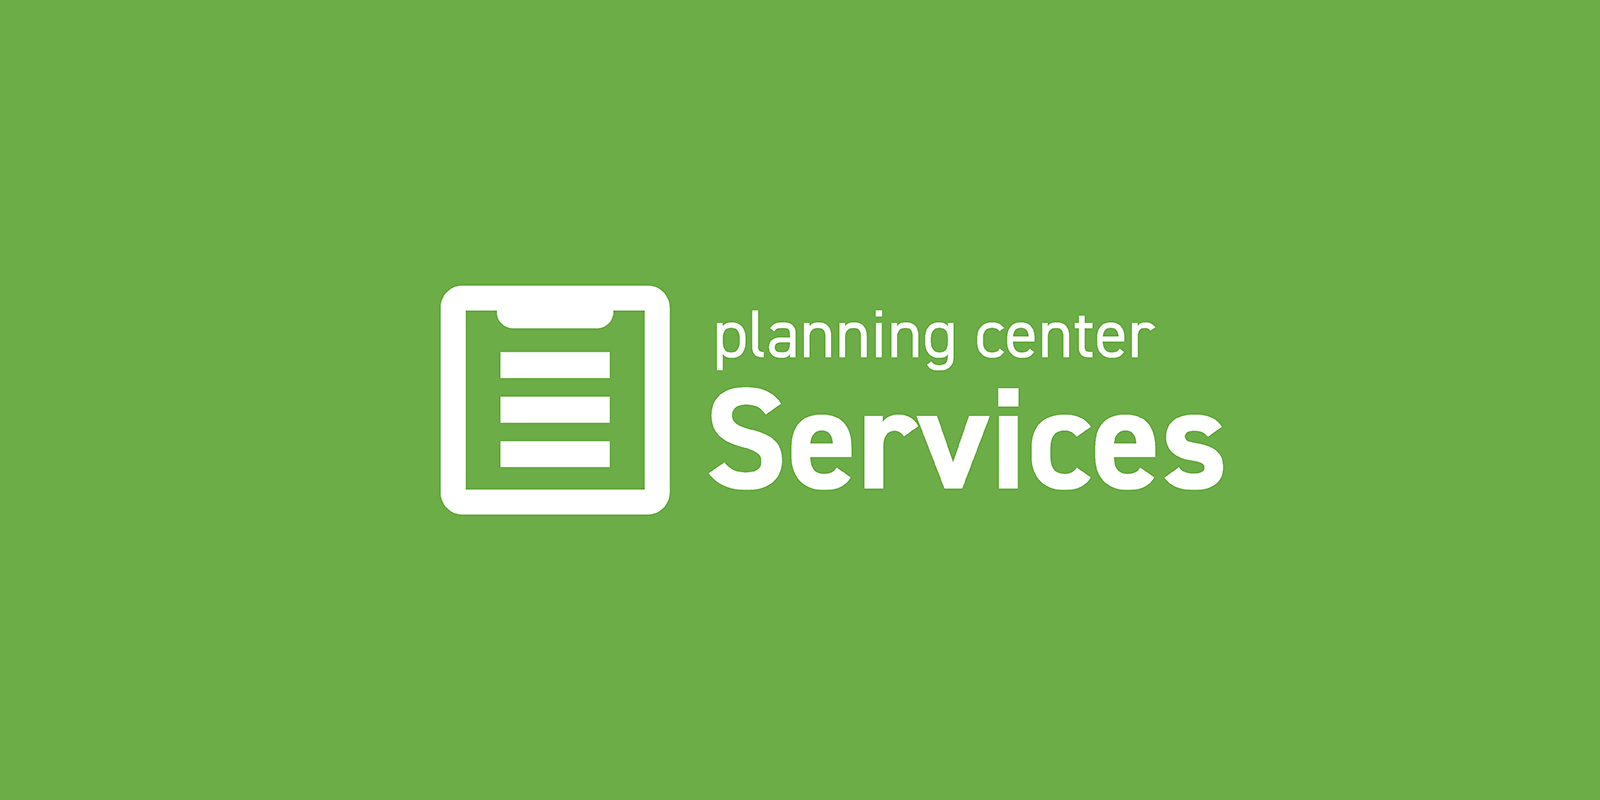 Planning Center. Teamcenter логотип. Central planning